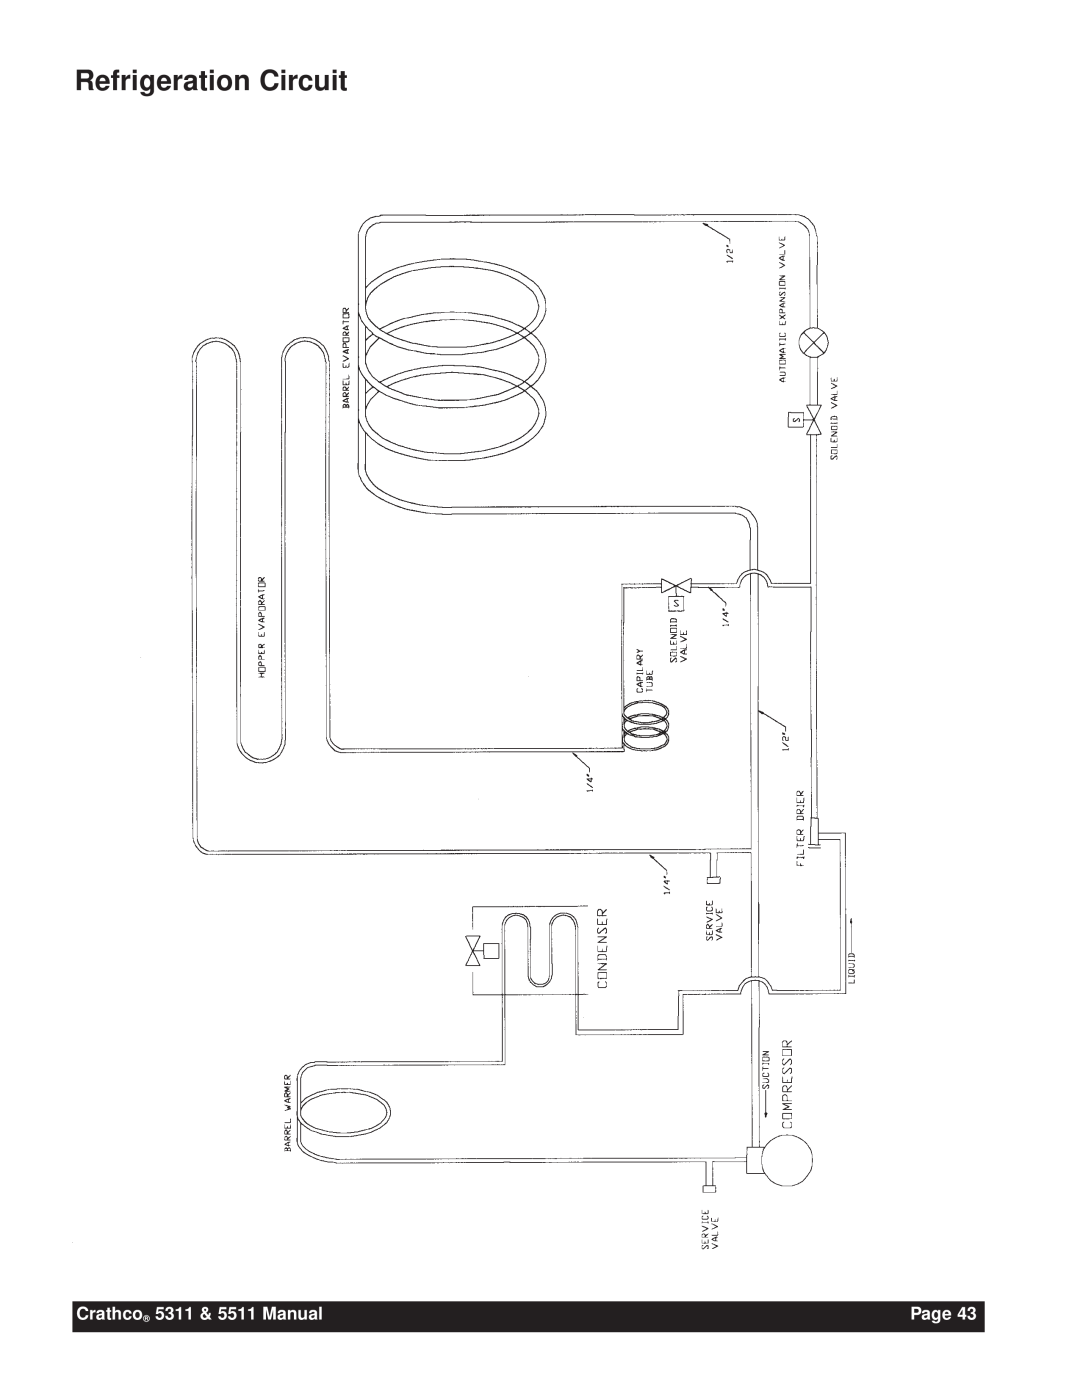 Grindmaster instruction manual Refrigeration Circuit, Crathco 5311 & 5511 Manual, Page 